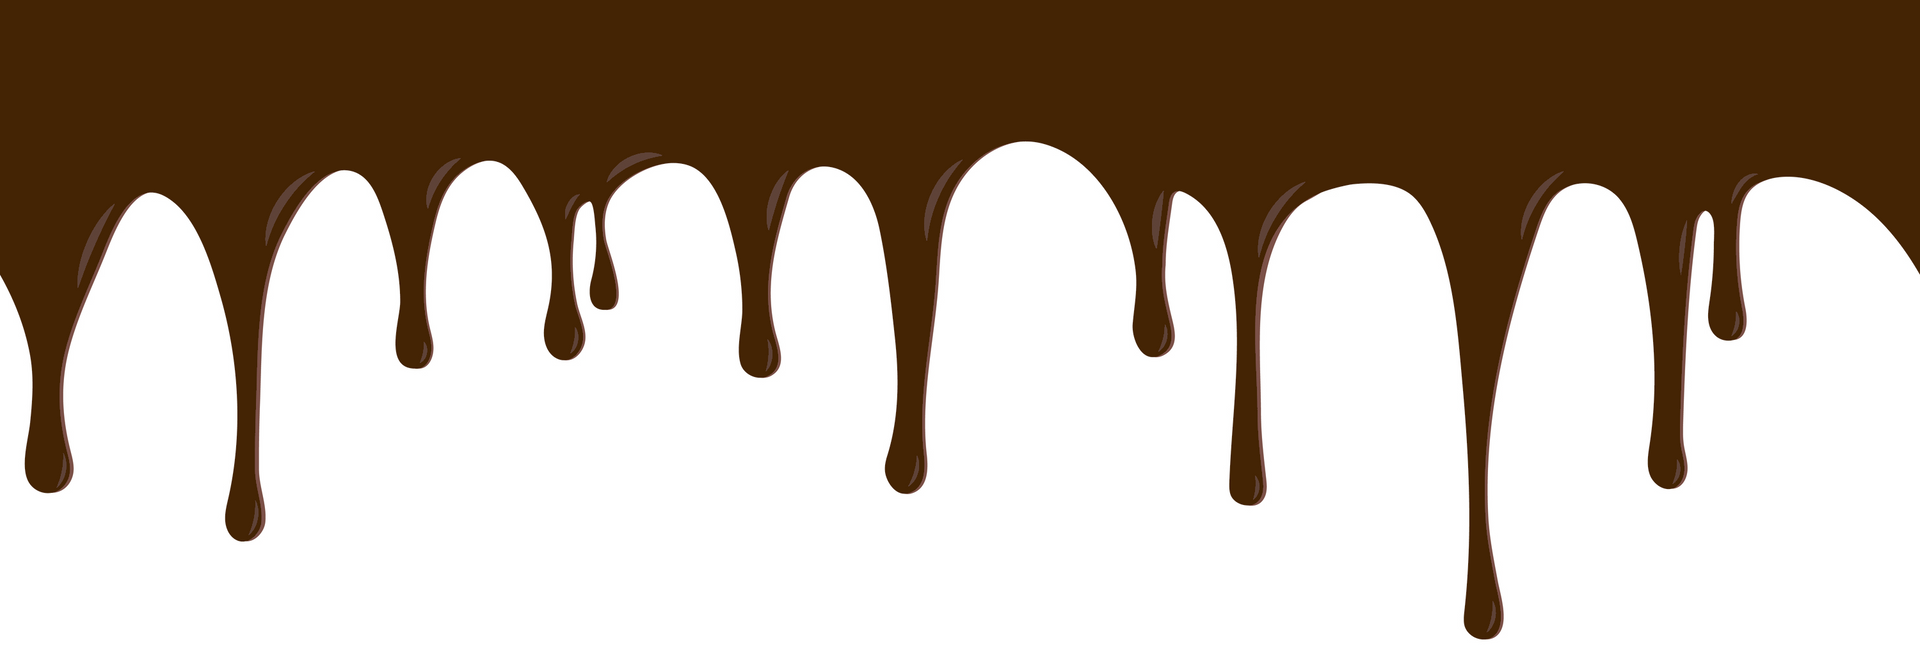 achtergrond druipend cacao